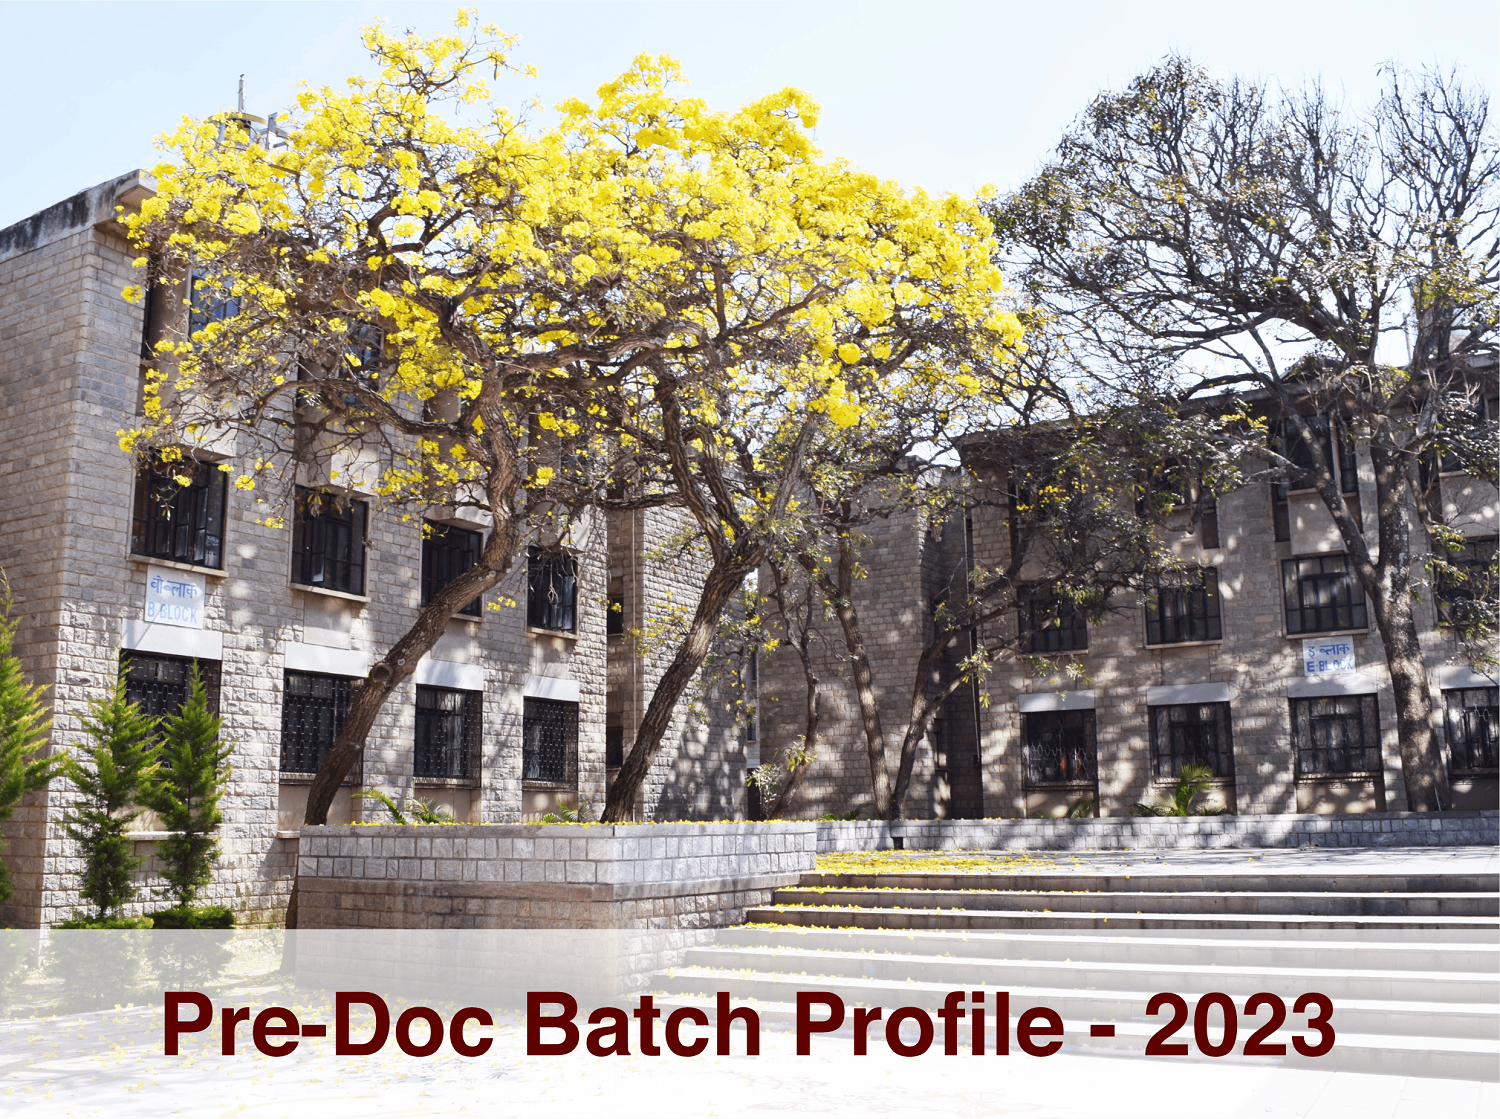 Pro-doc 2023 Batch Profile